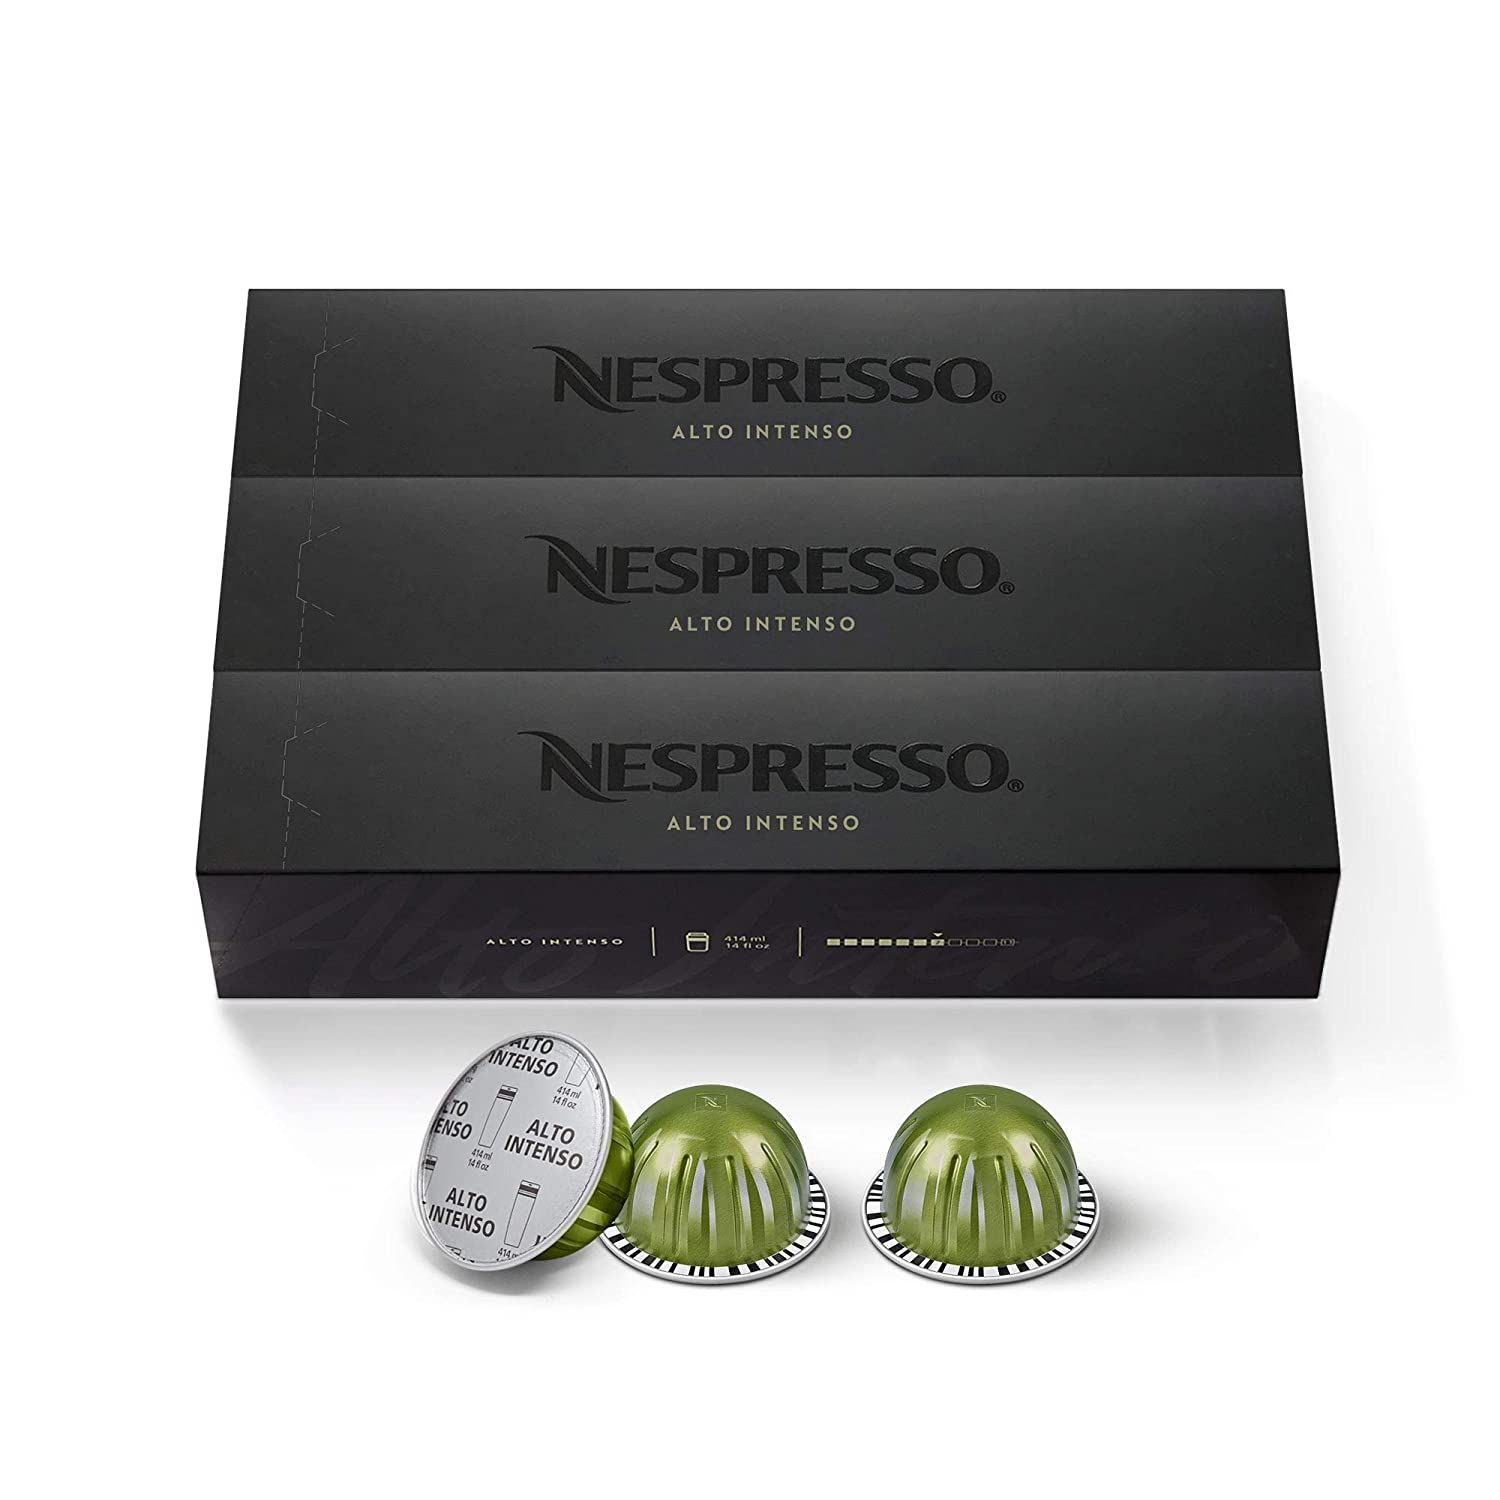 Nespresso Vertuoline Pods Everything You Need to Know